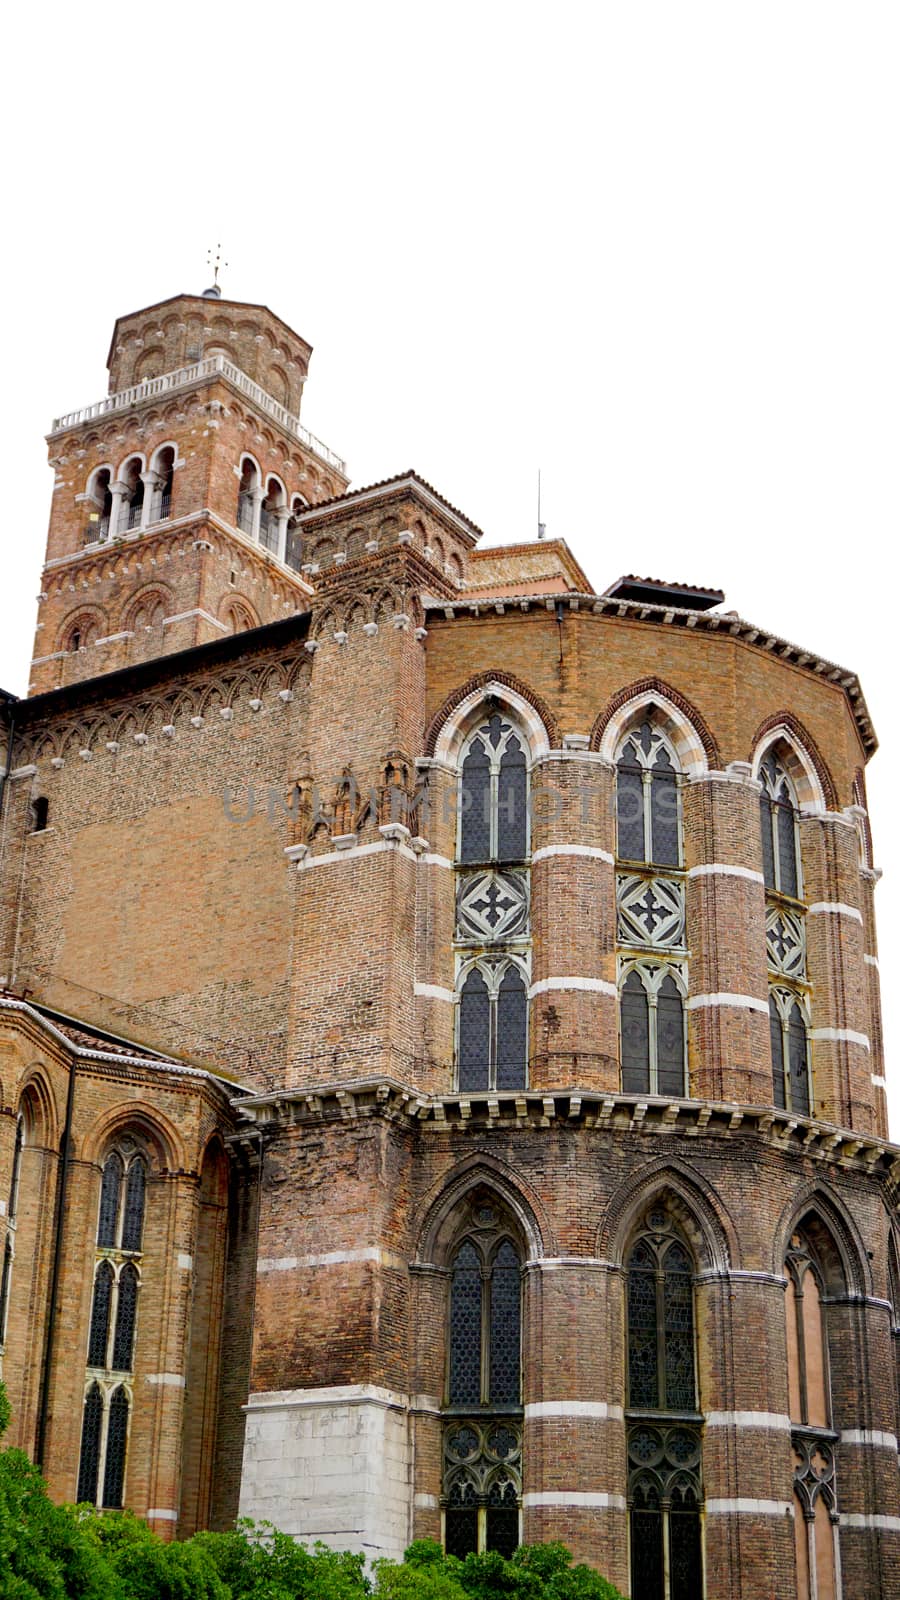 ancient church Santa maria building in old town city Venice, Italy